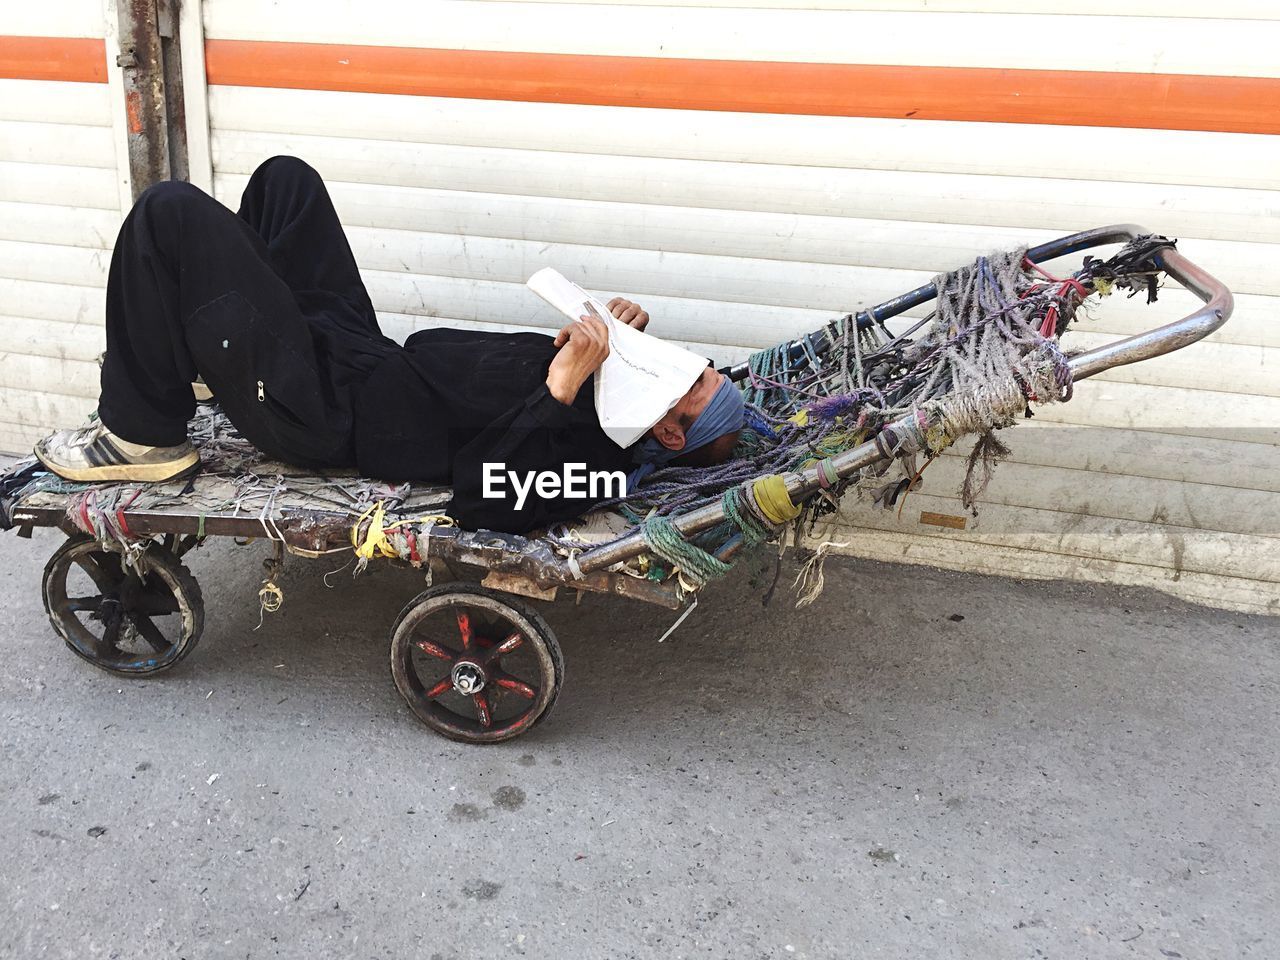 Man sleeping on cart against shutter at molavi square